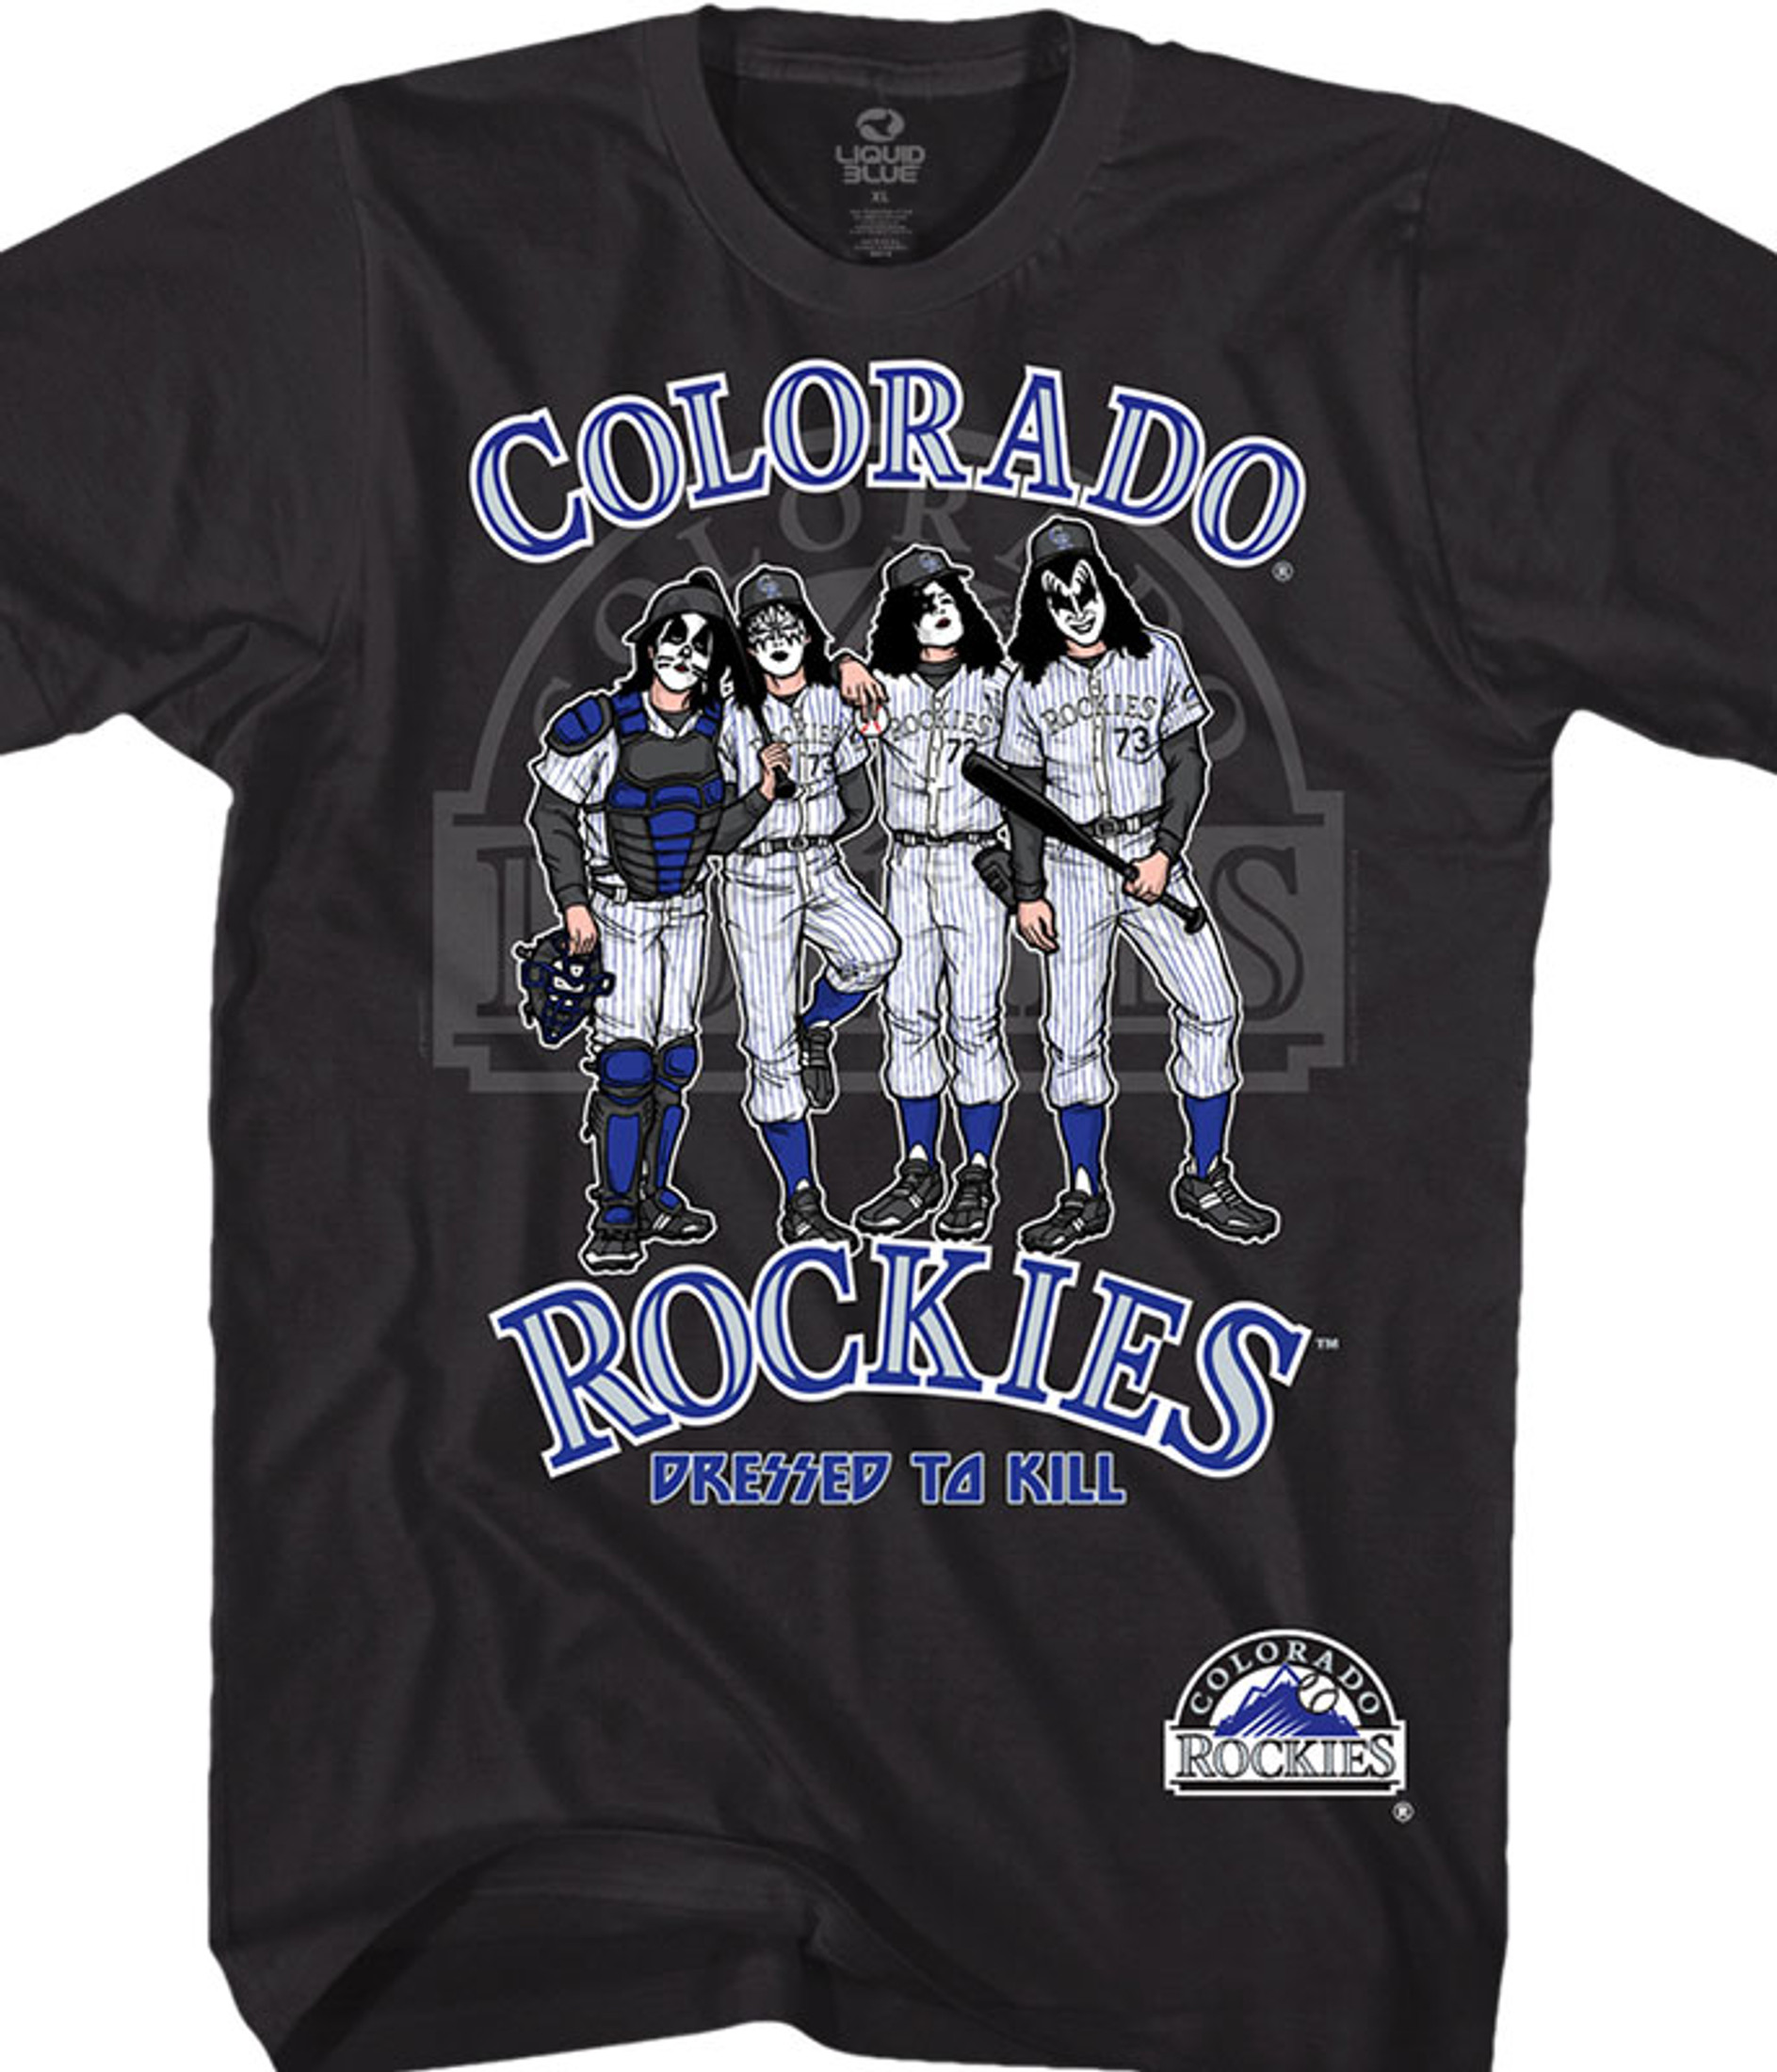 Colorado Rockies Dressed to Kill Black T-Shirt